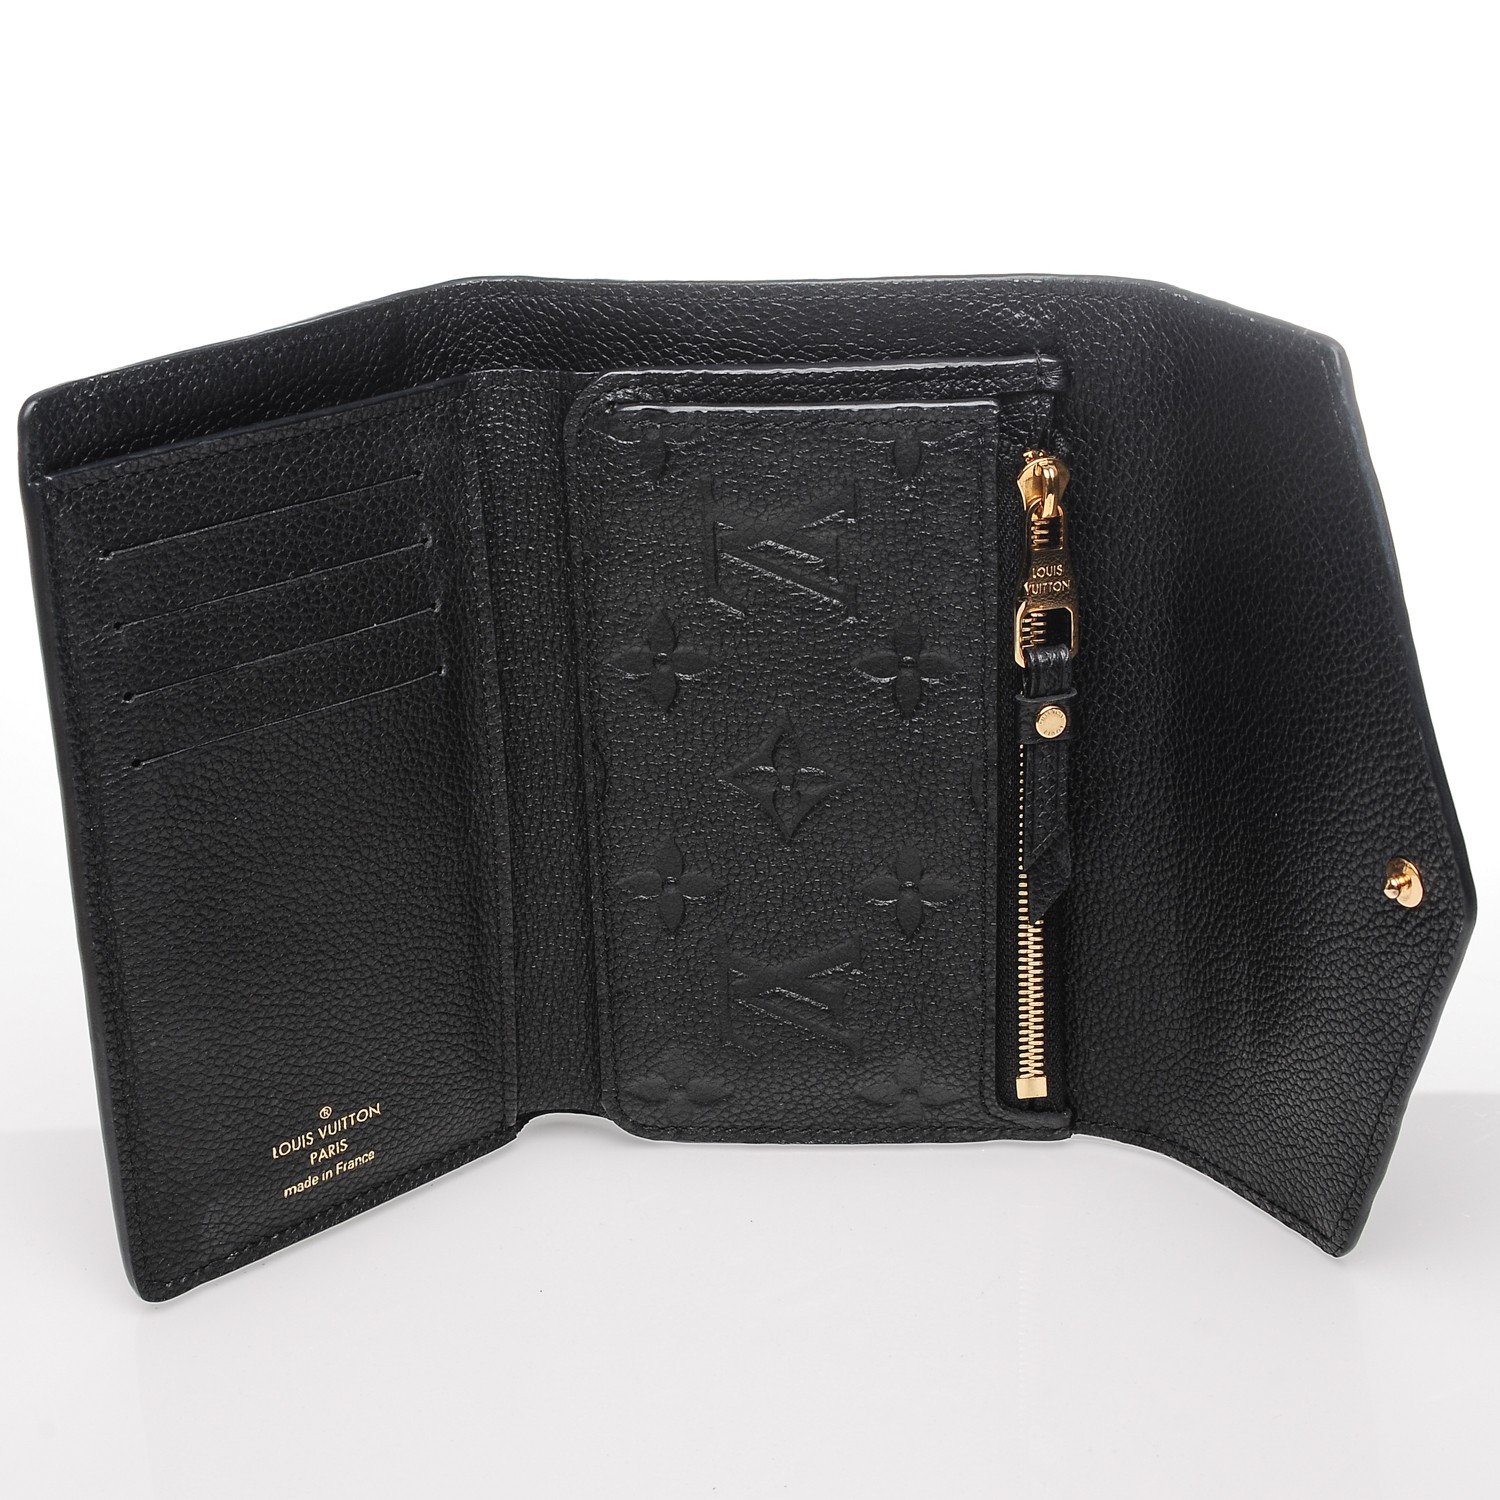 LOUIS VUITTON Empreinte Compact Curieuse Wallet Black 221709